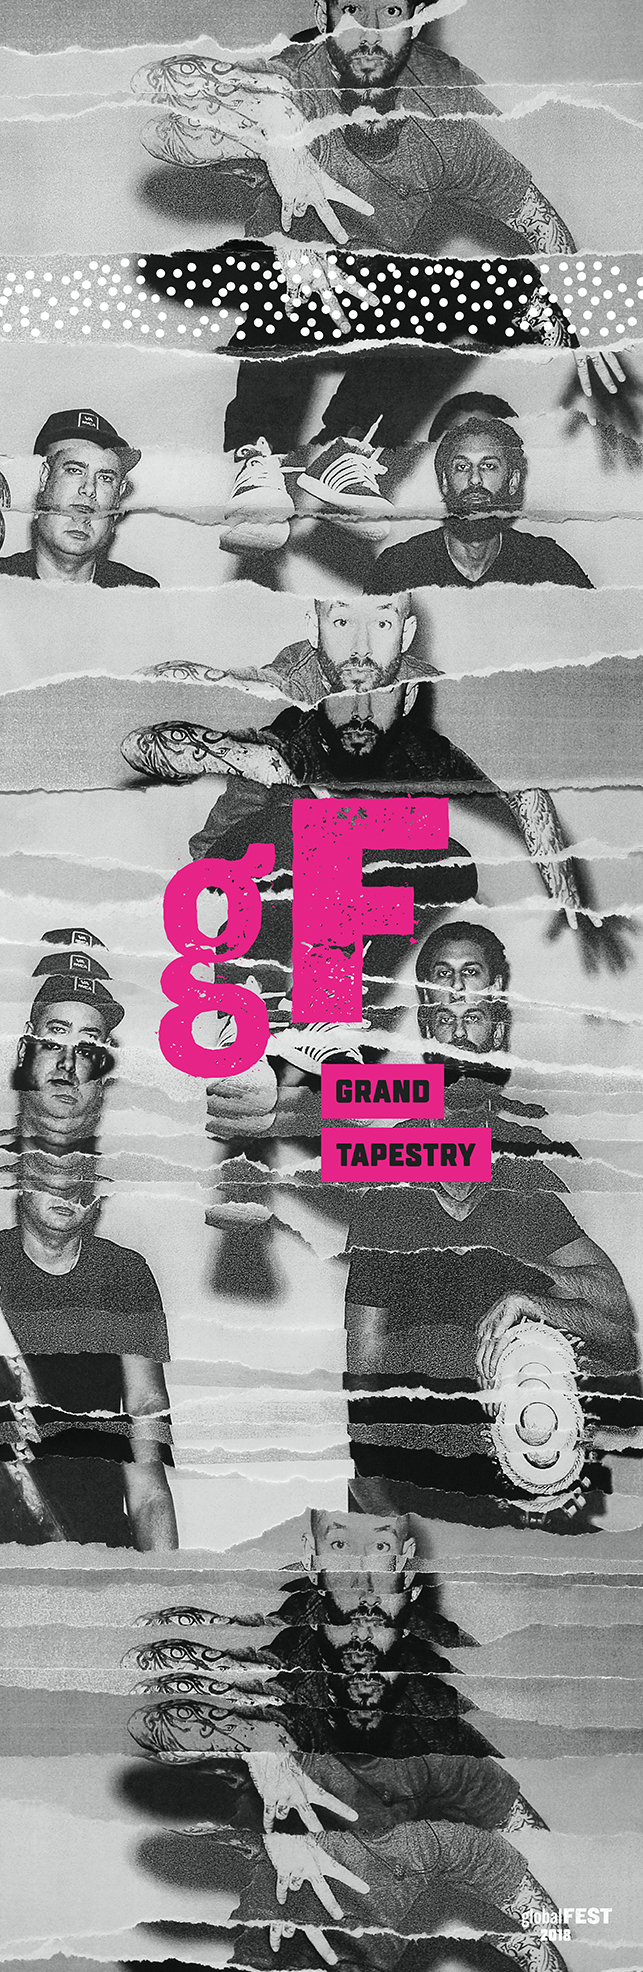 diogomontes_globalfest_artist_posters-grandtapestry